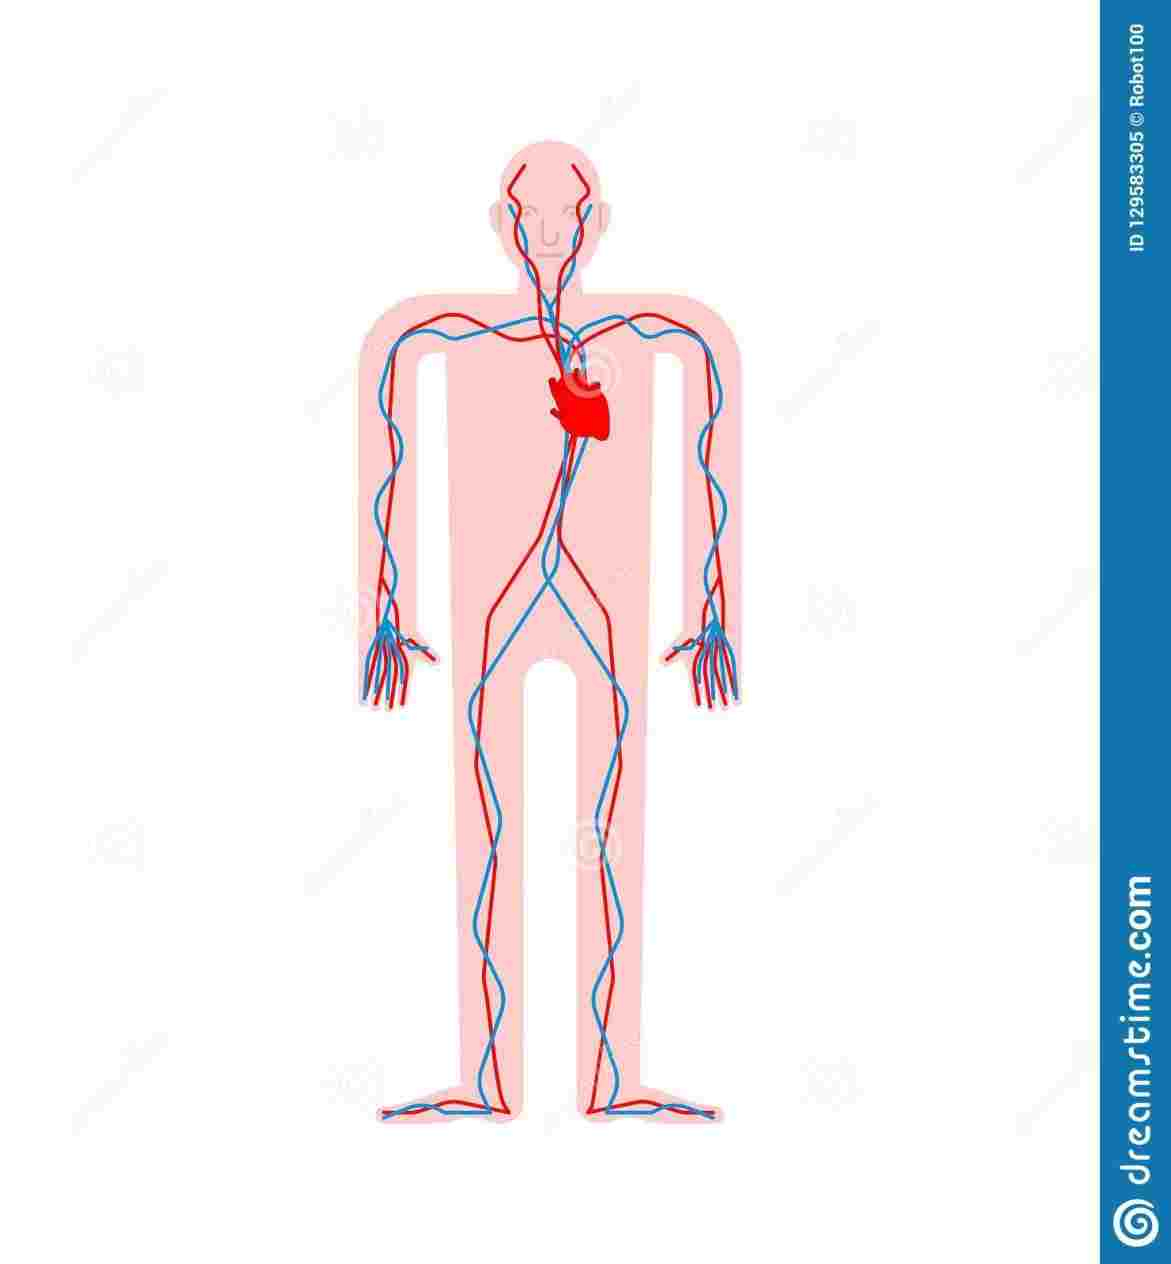 Internal Organs Diagram Organ Diagram Of Human Body Of Internal Organs Human Body Anatomy